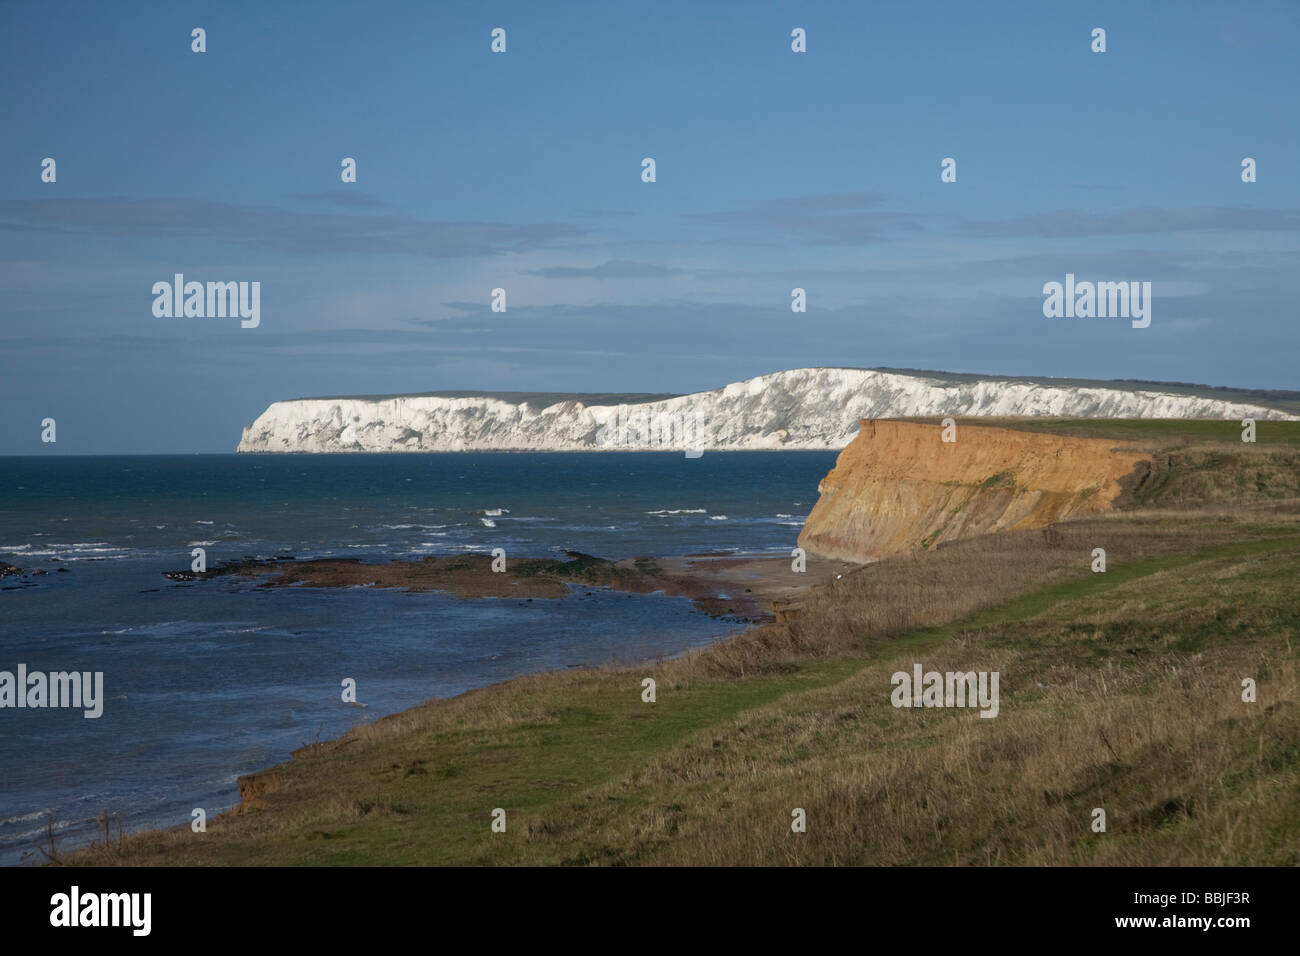 Brook United Kingdom England GB Cliffs on the Isle of Wight Stock Photo